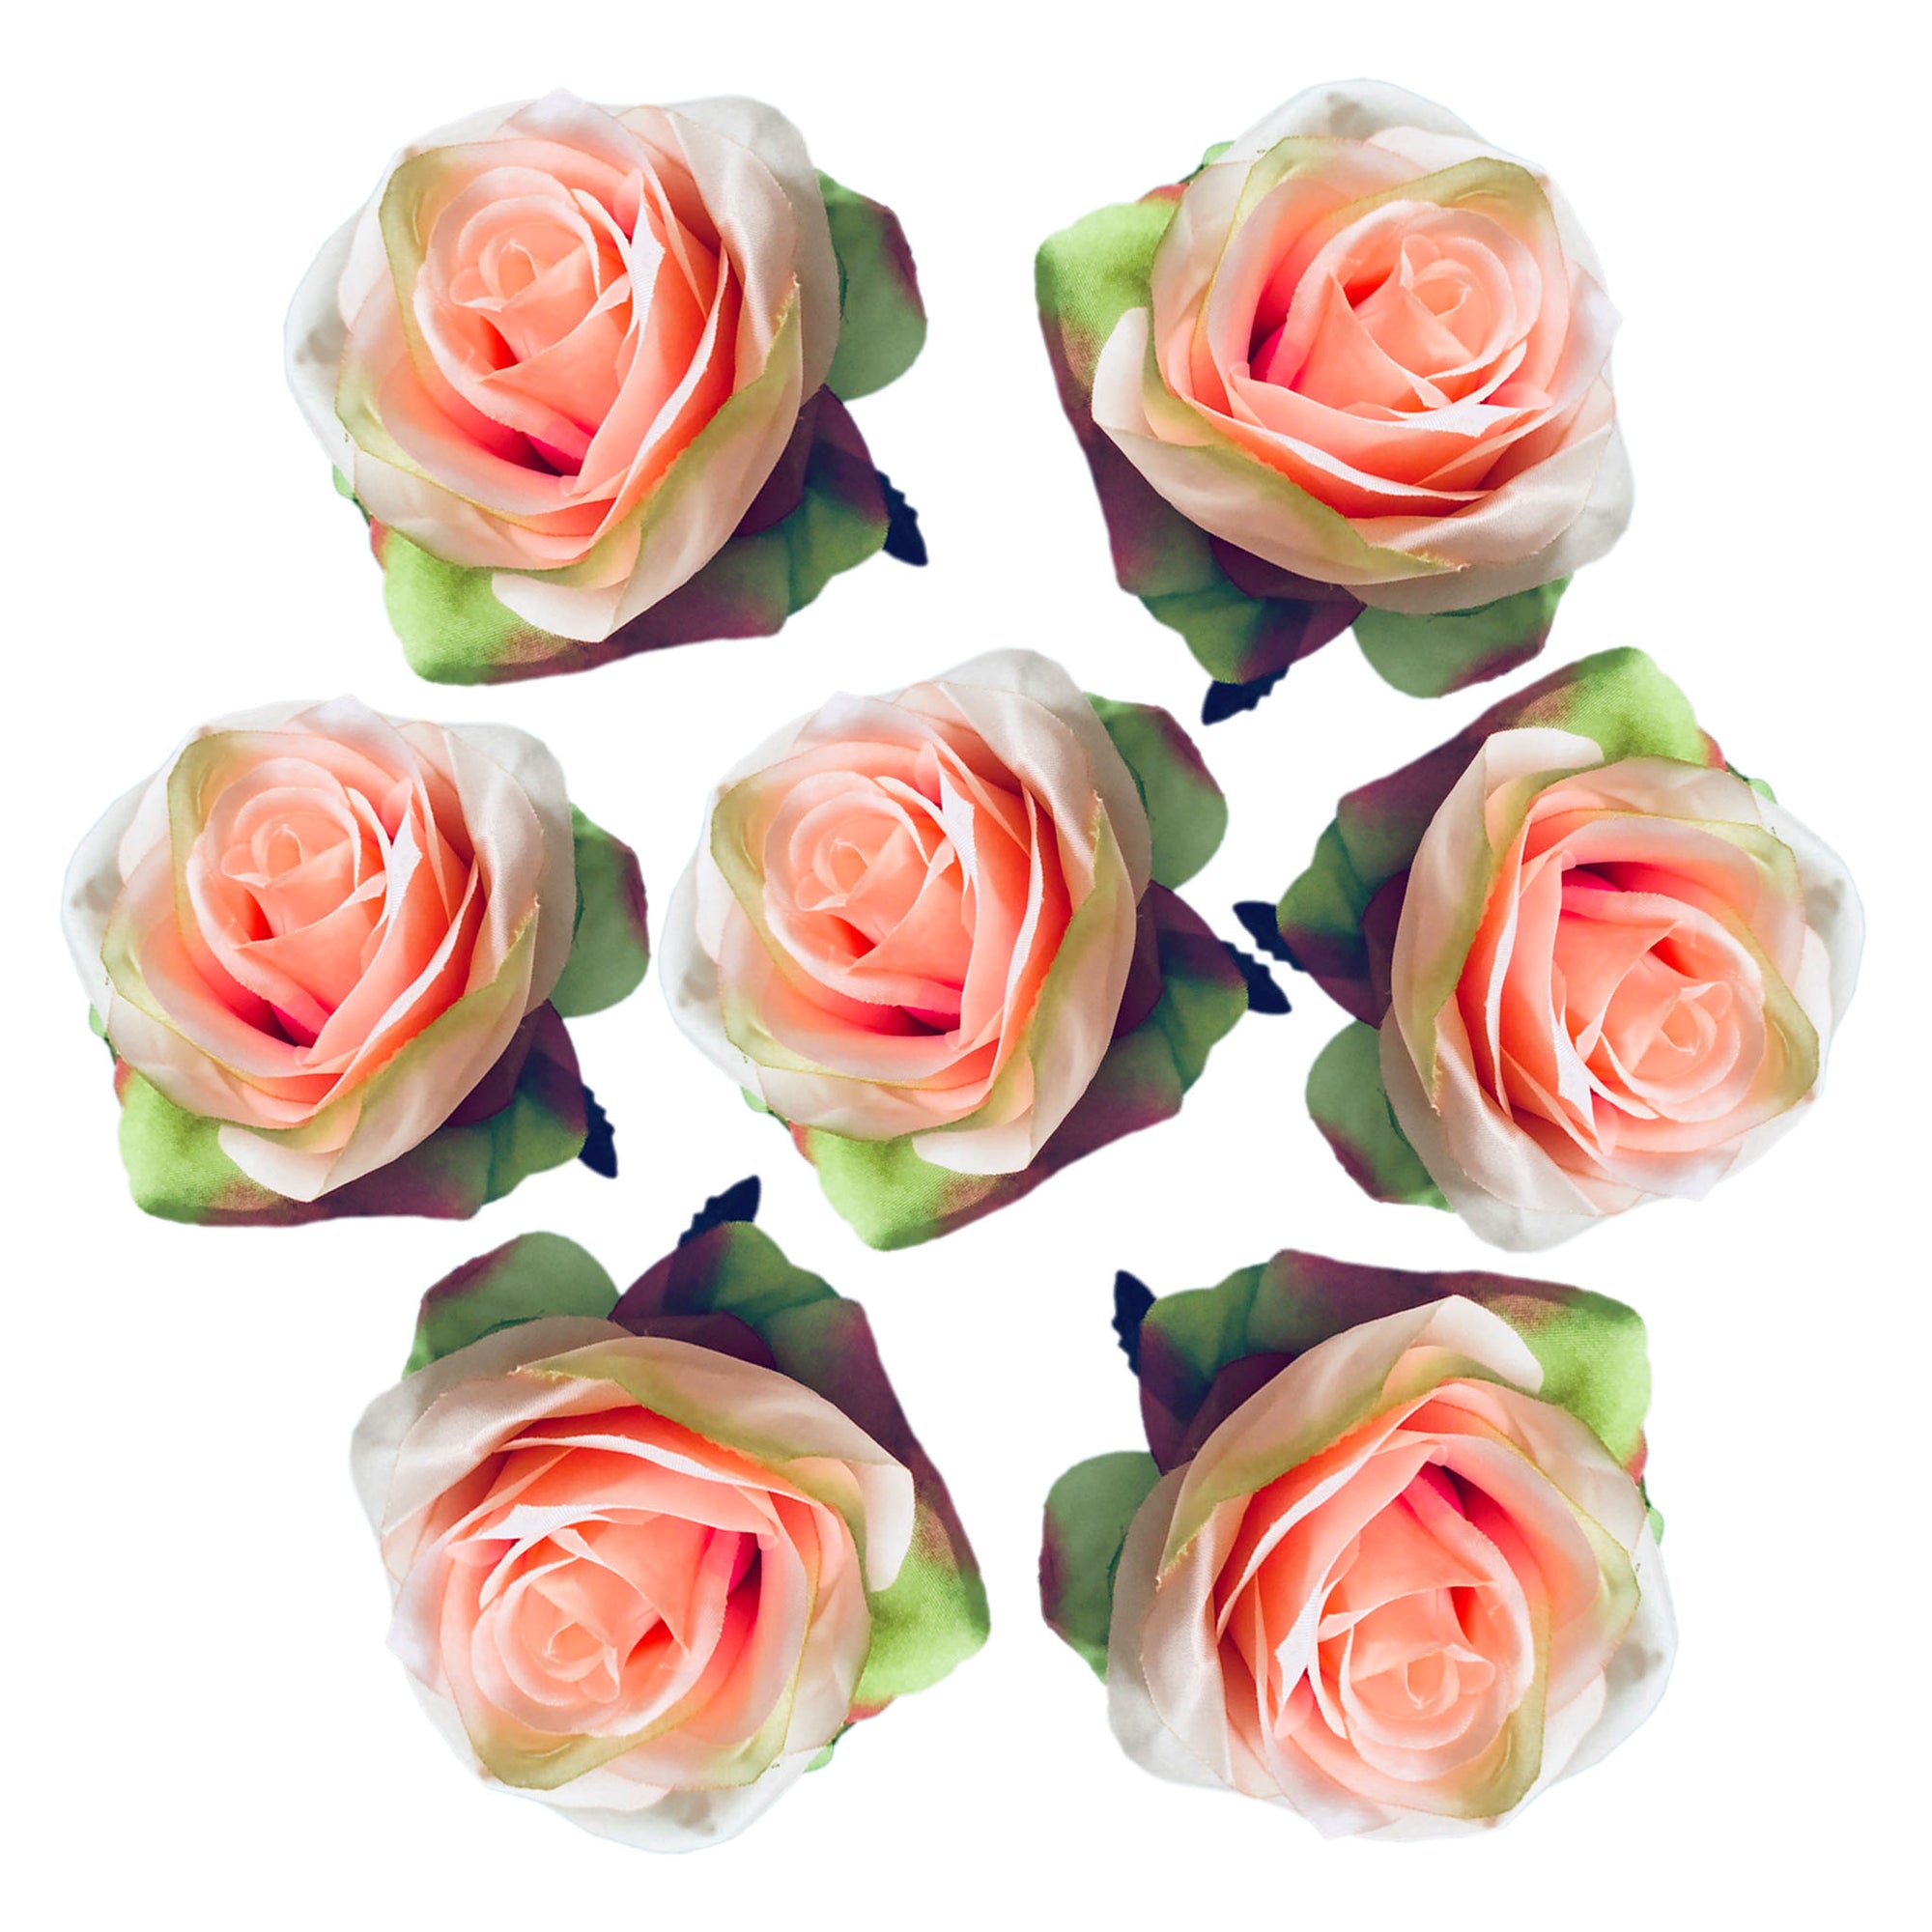 Wholesale Silk Rose Flowers Bulk Flower Heads